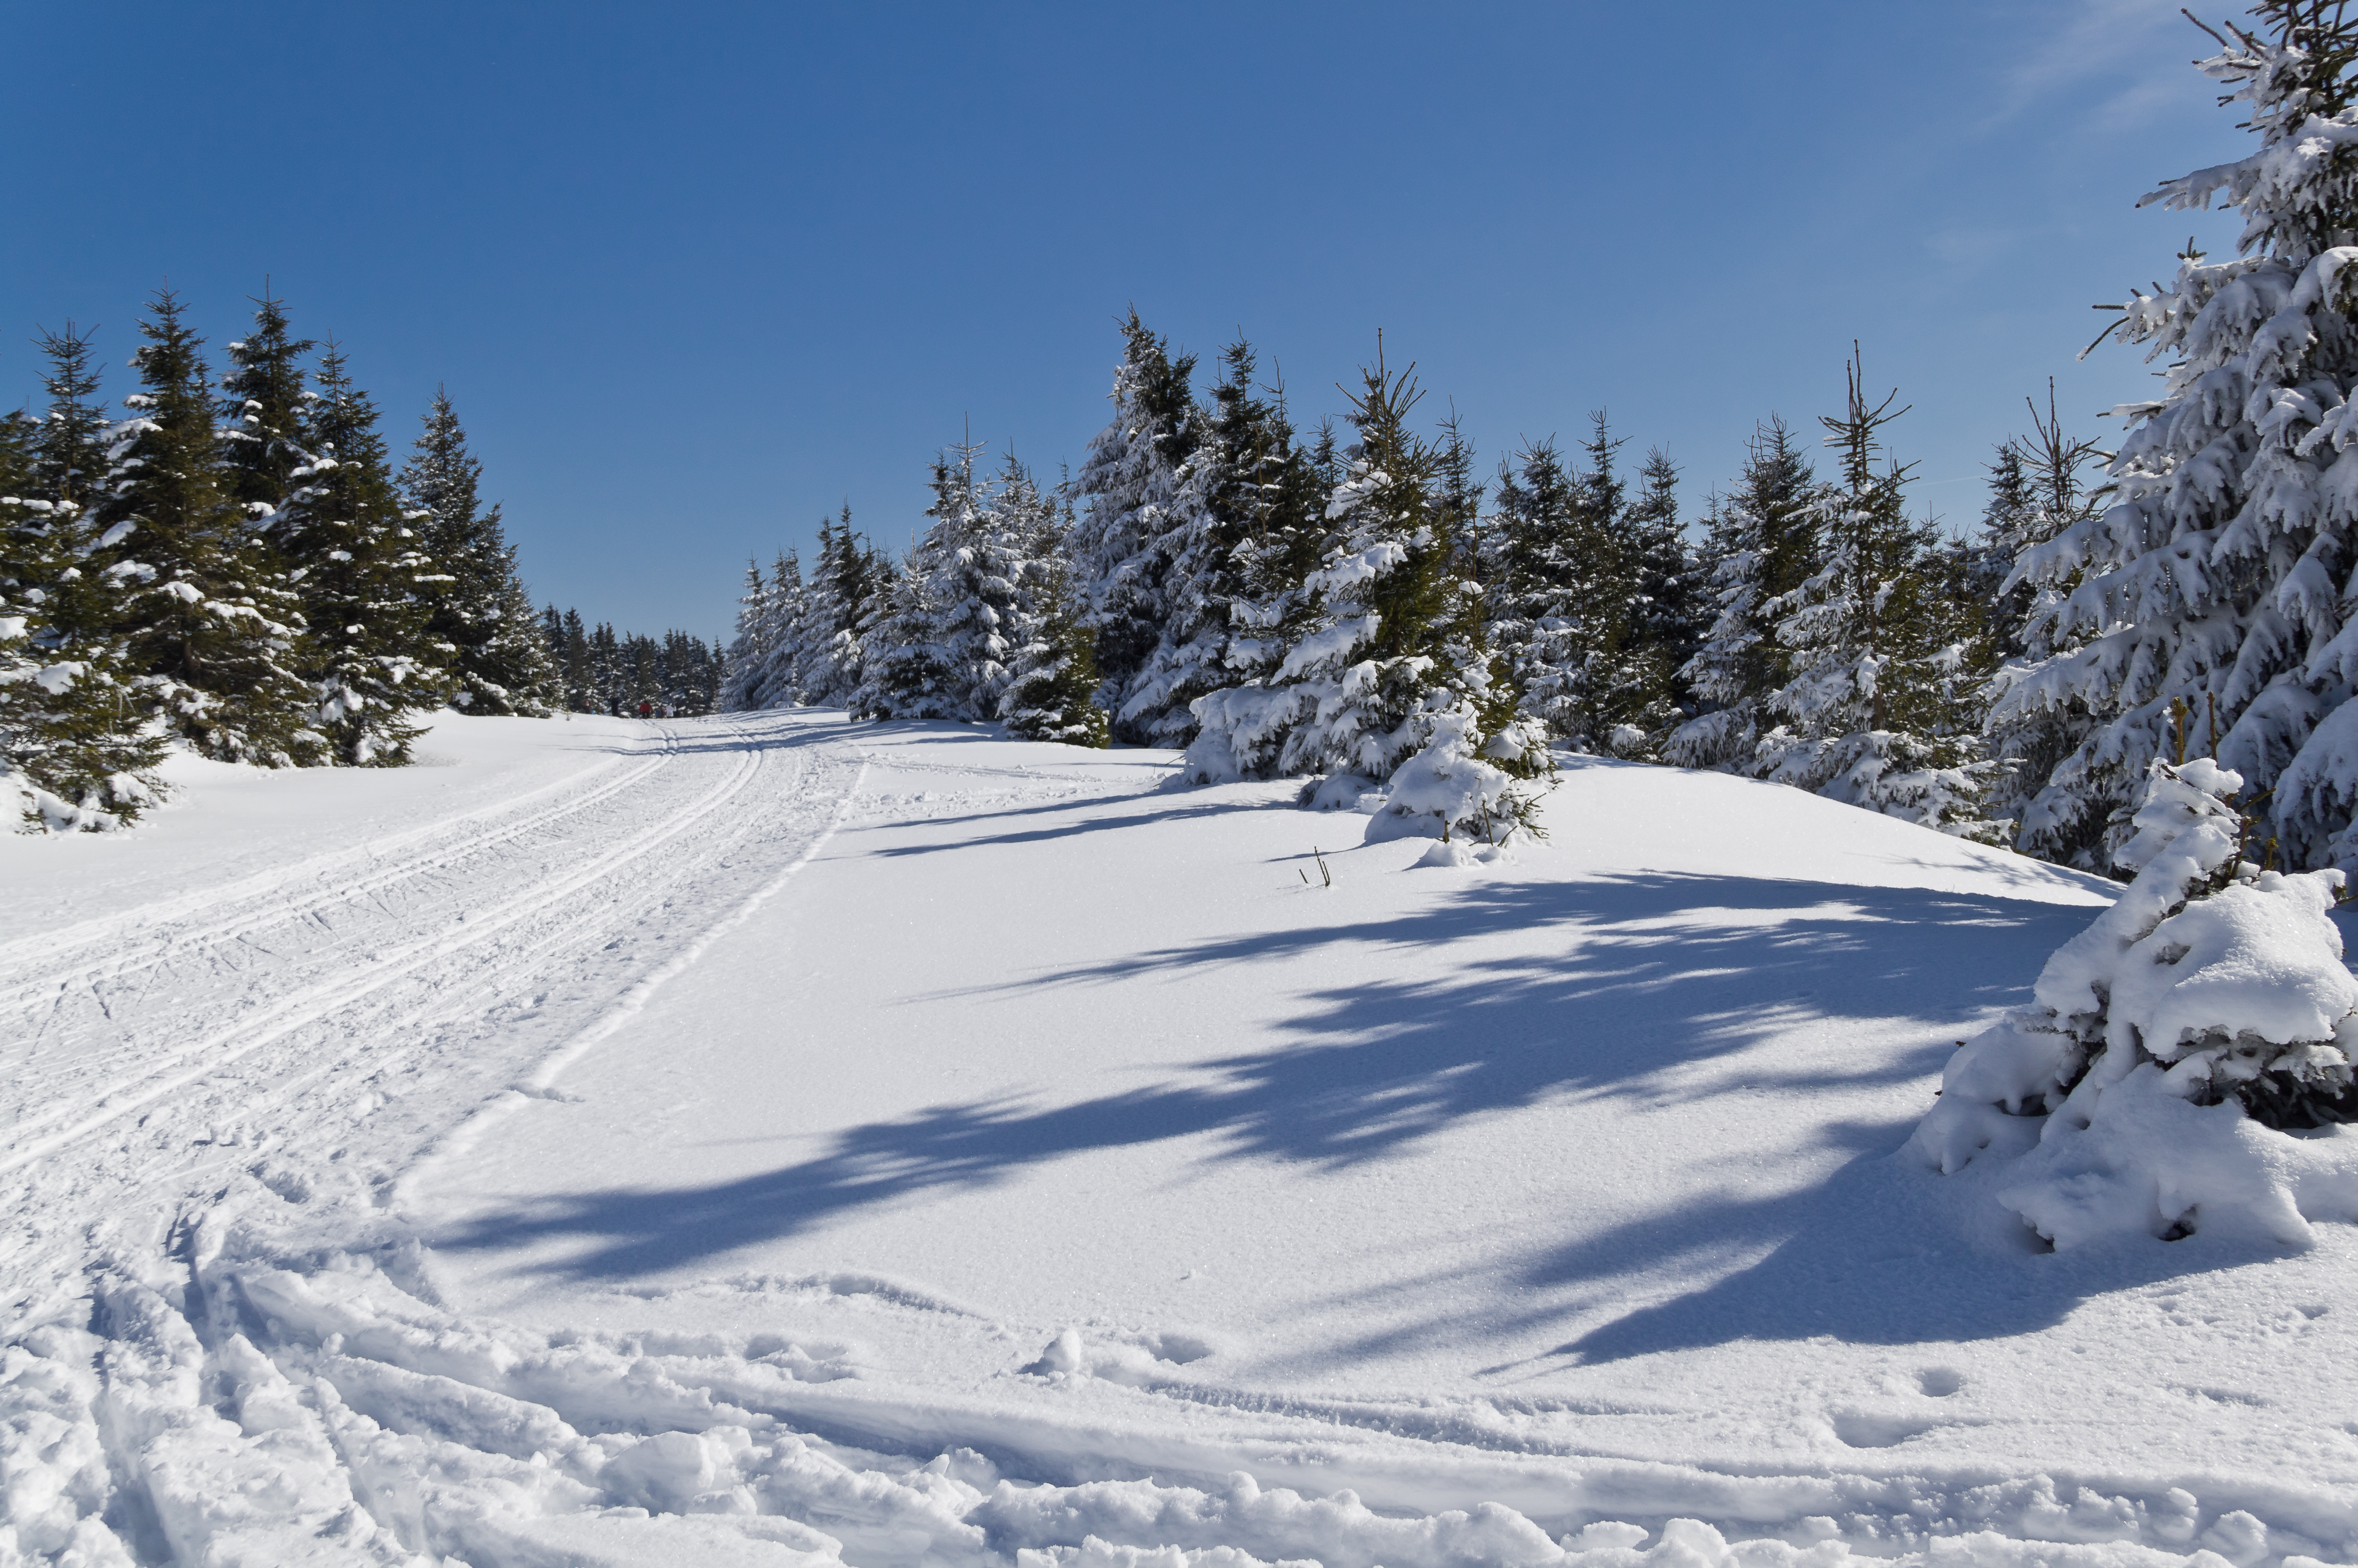 Skiing track photo